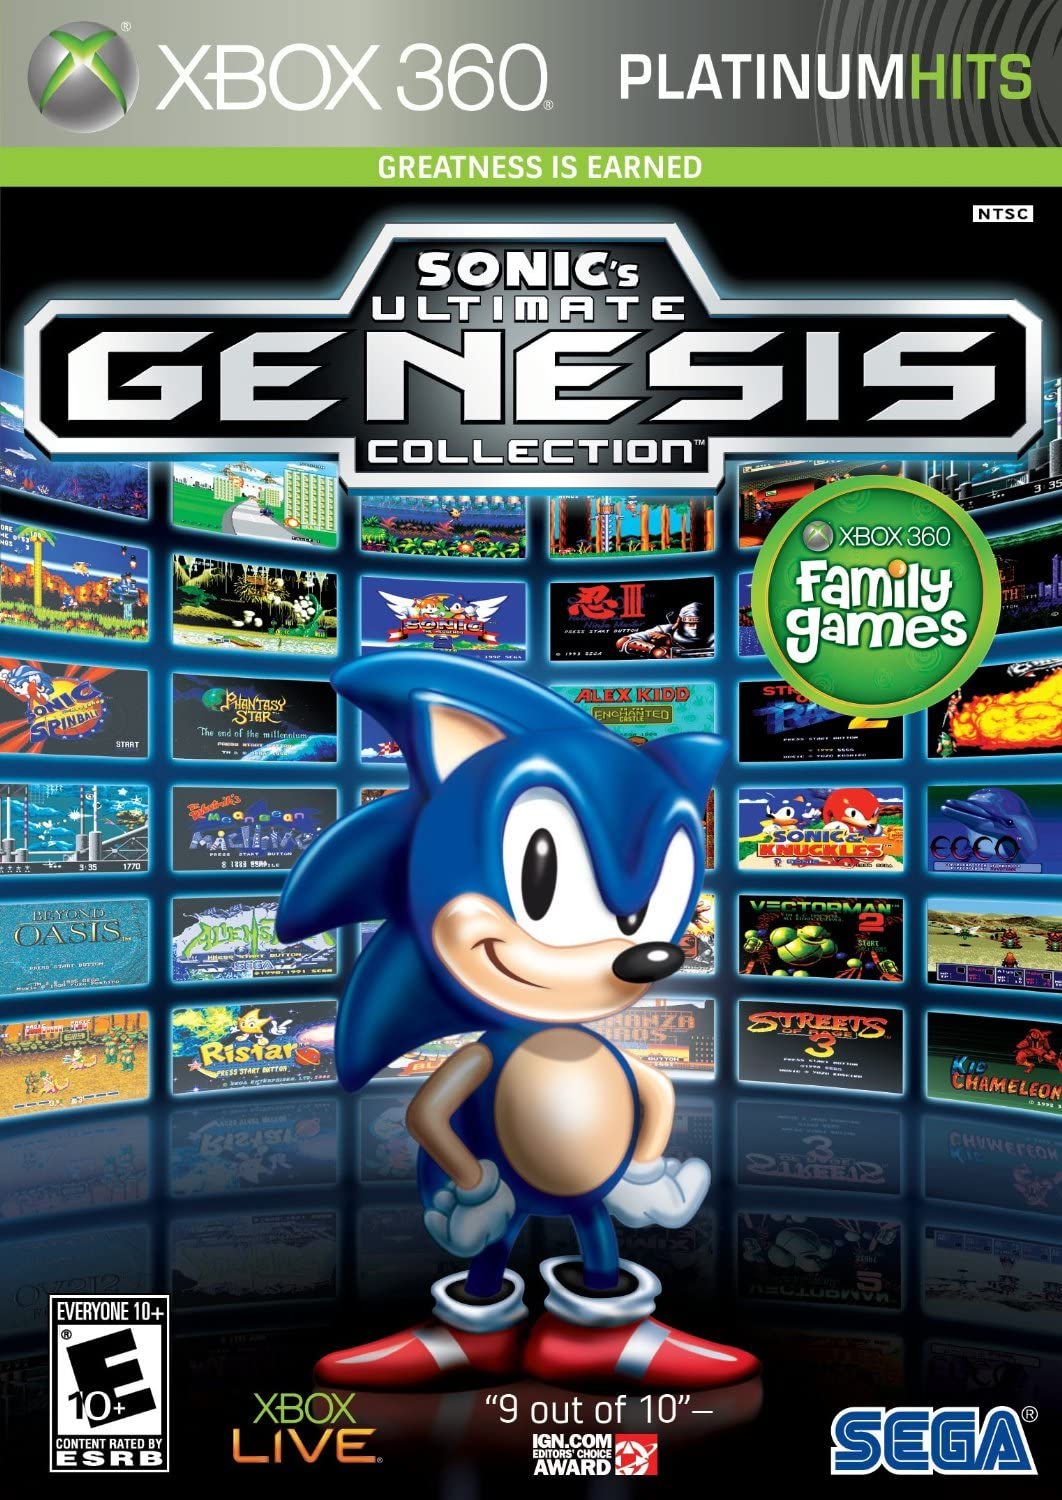 Sonics Ultimate Genesis Collection Xbox